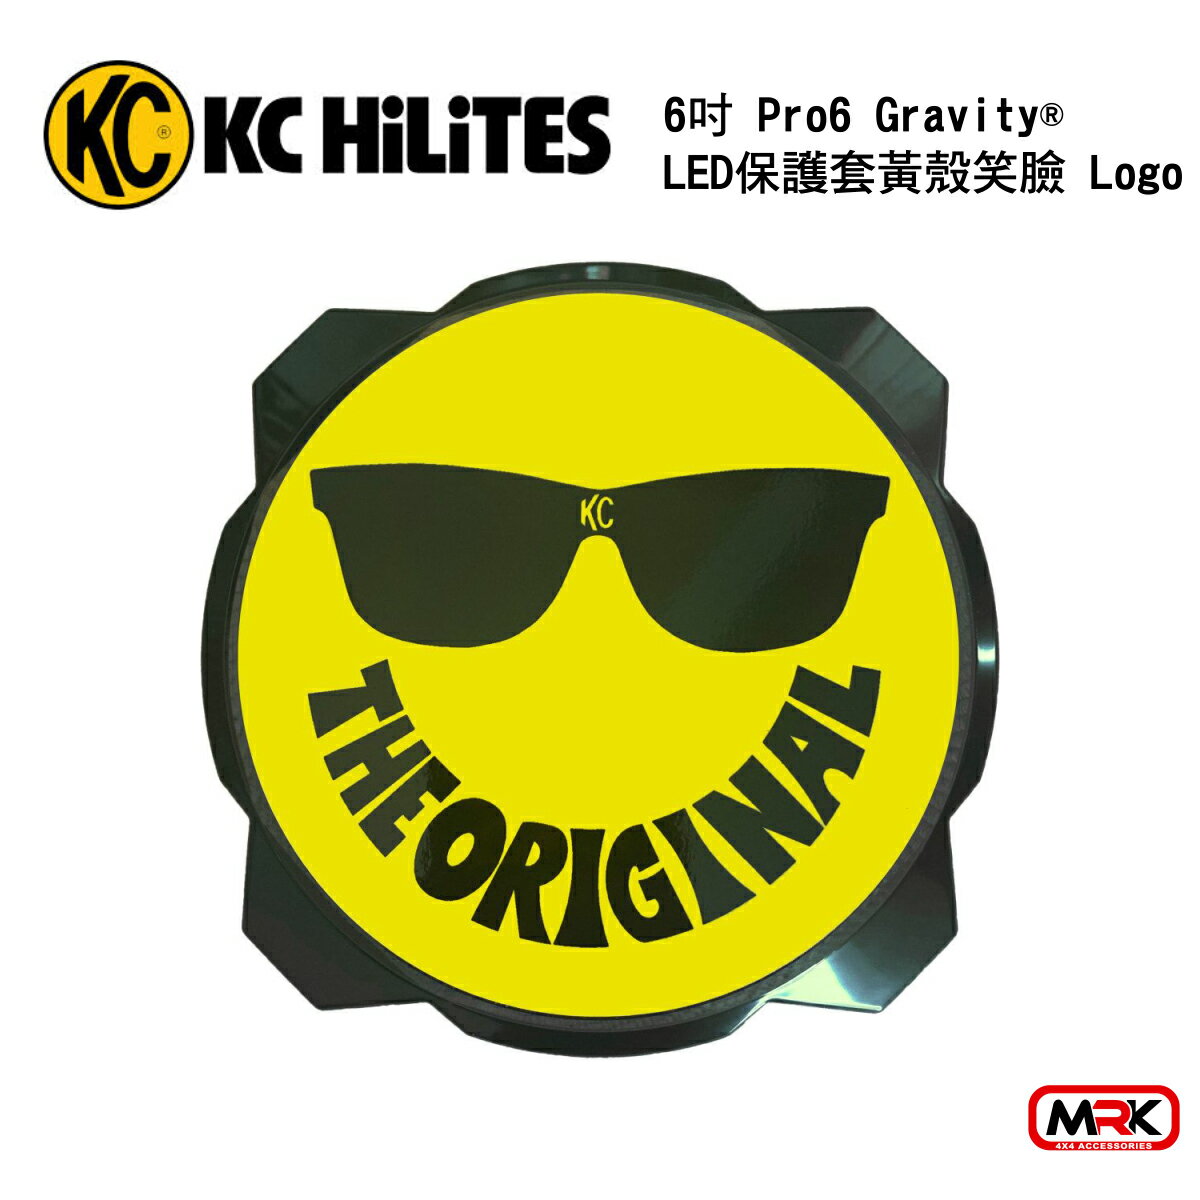 【MRK】KC Hilites LED 6吋 Pro6 Gravity® LED探照燈 保護套 logo (1只)